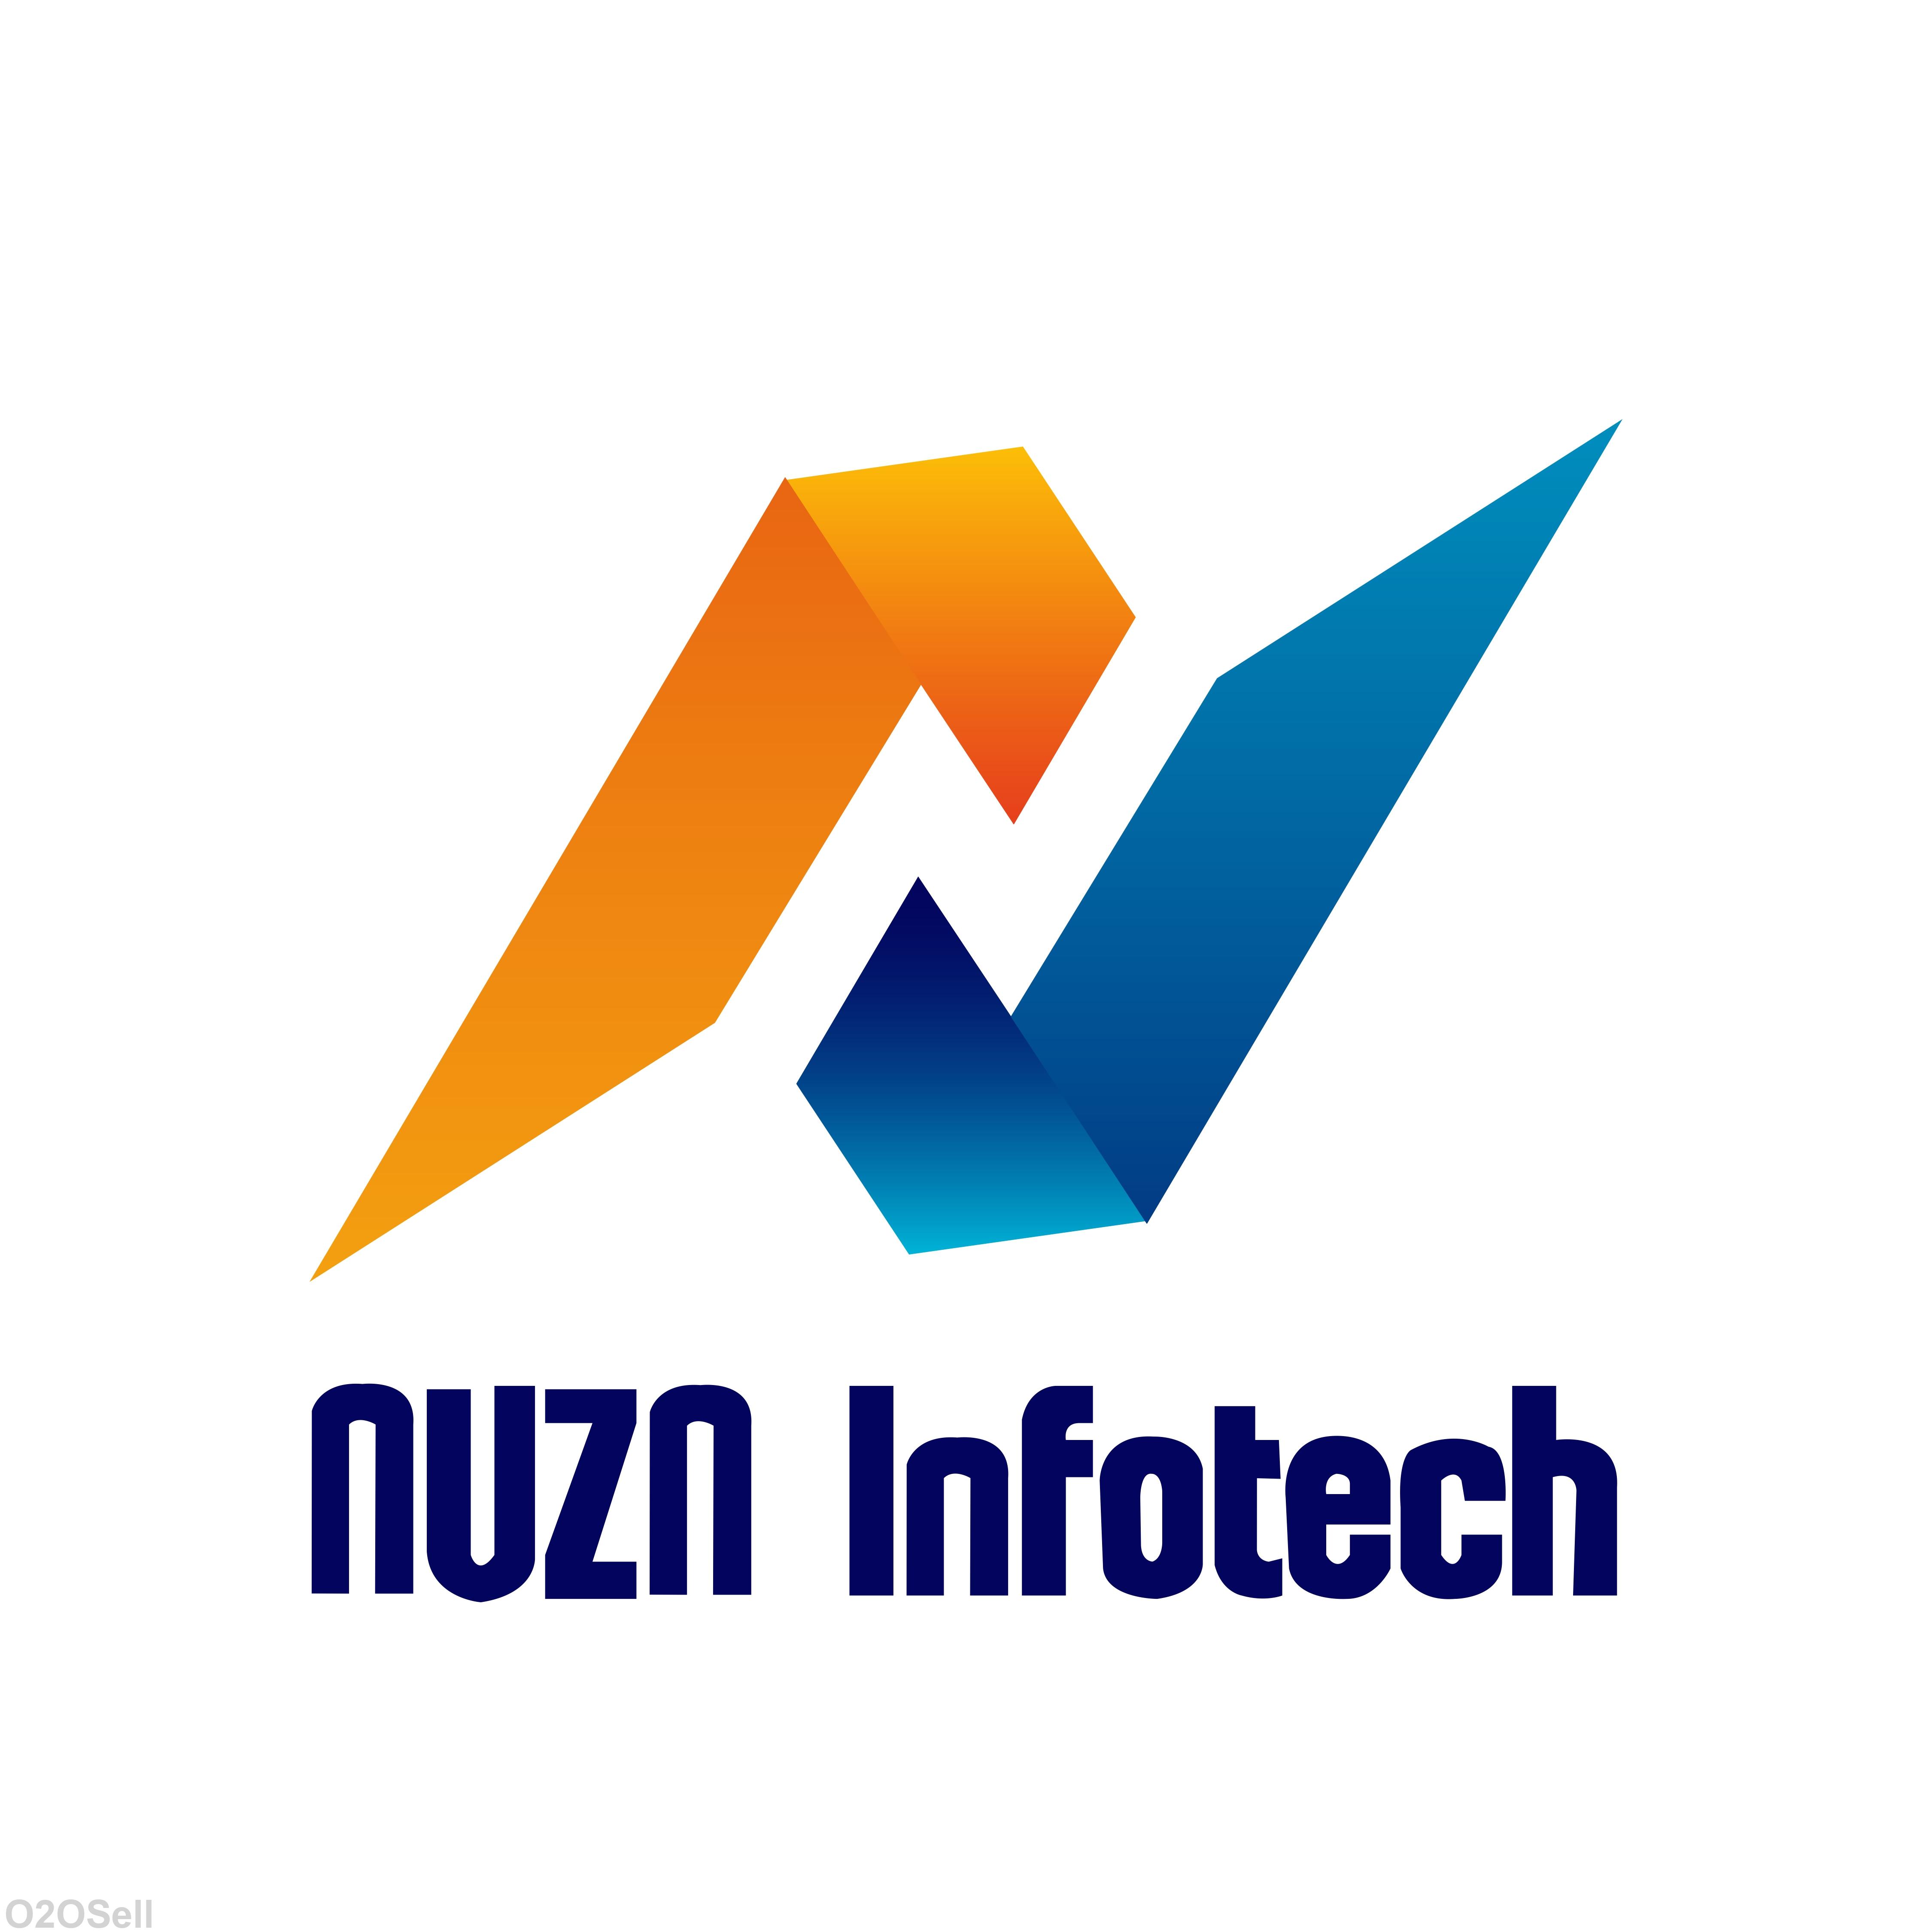 Nuzn Infotech - Profile Image